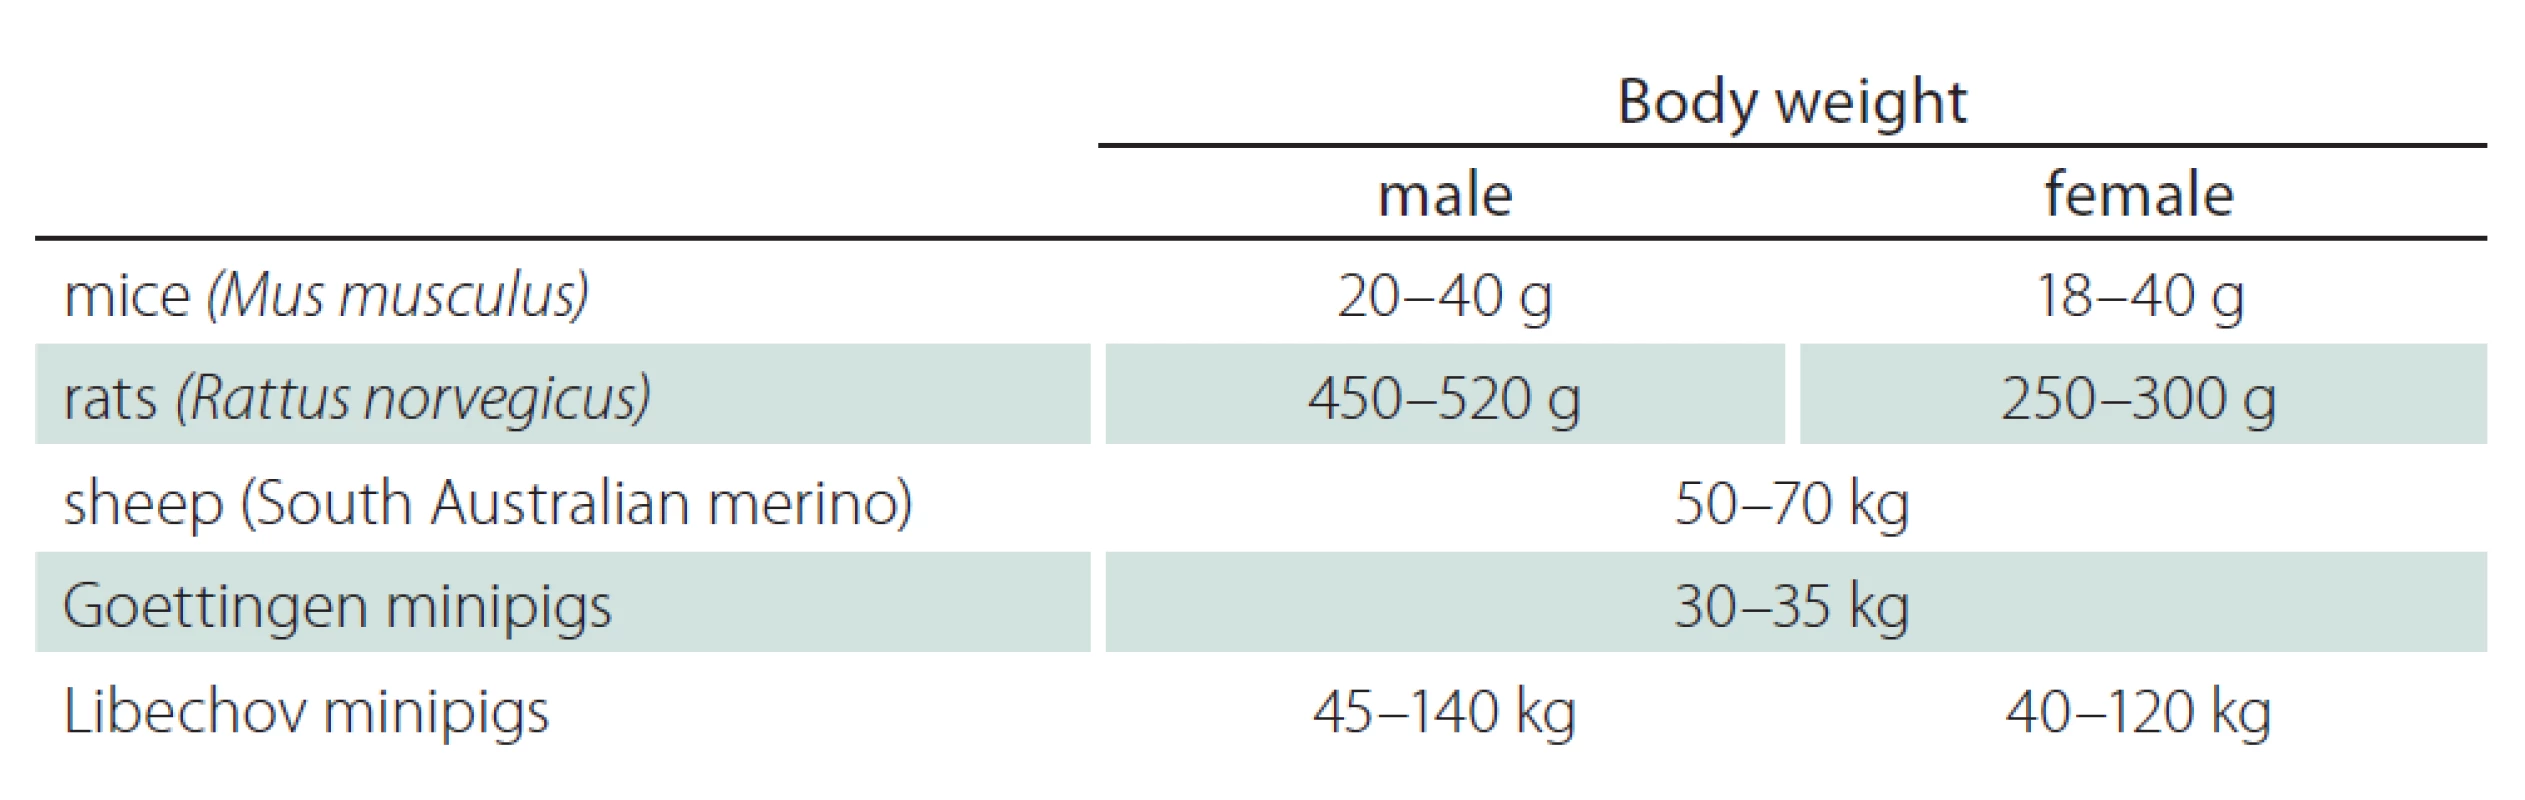 Average body weight of mice, rats, sheep, Goettingen and Libechov minipigs.